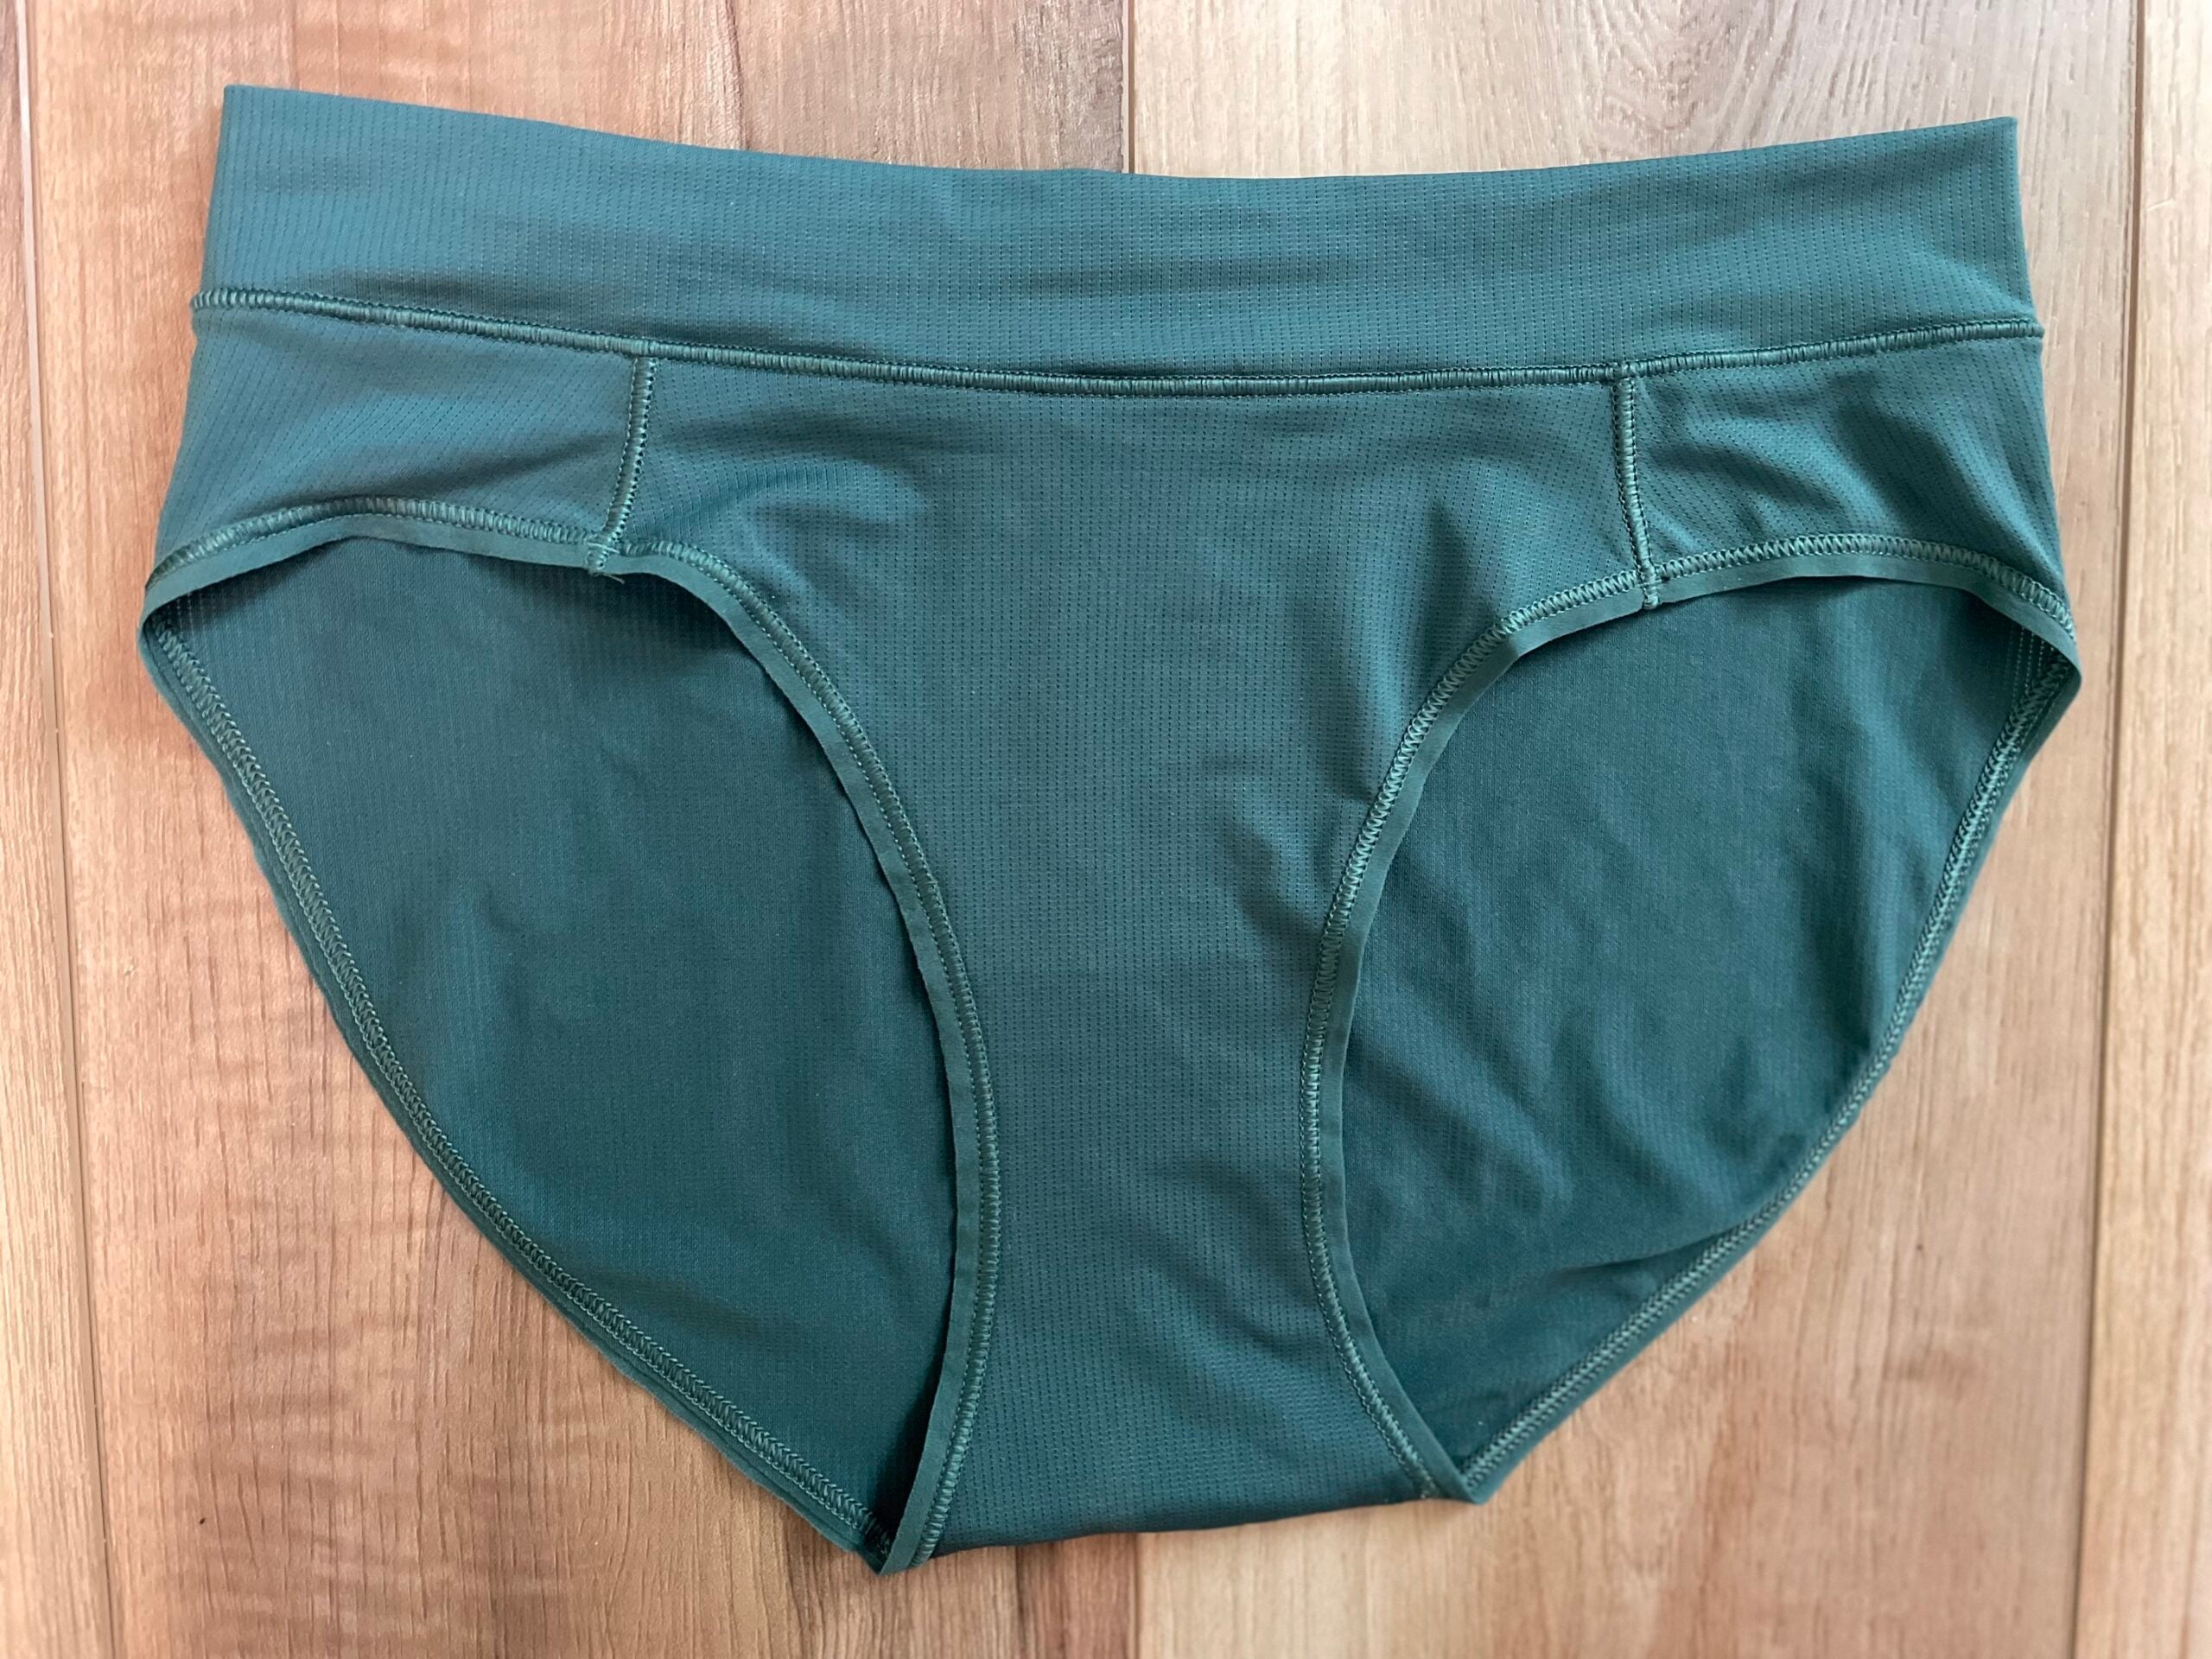 Women's Armachillo Cooling Hipster Underwear